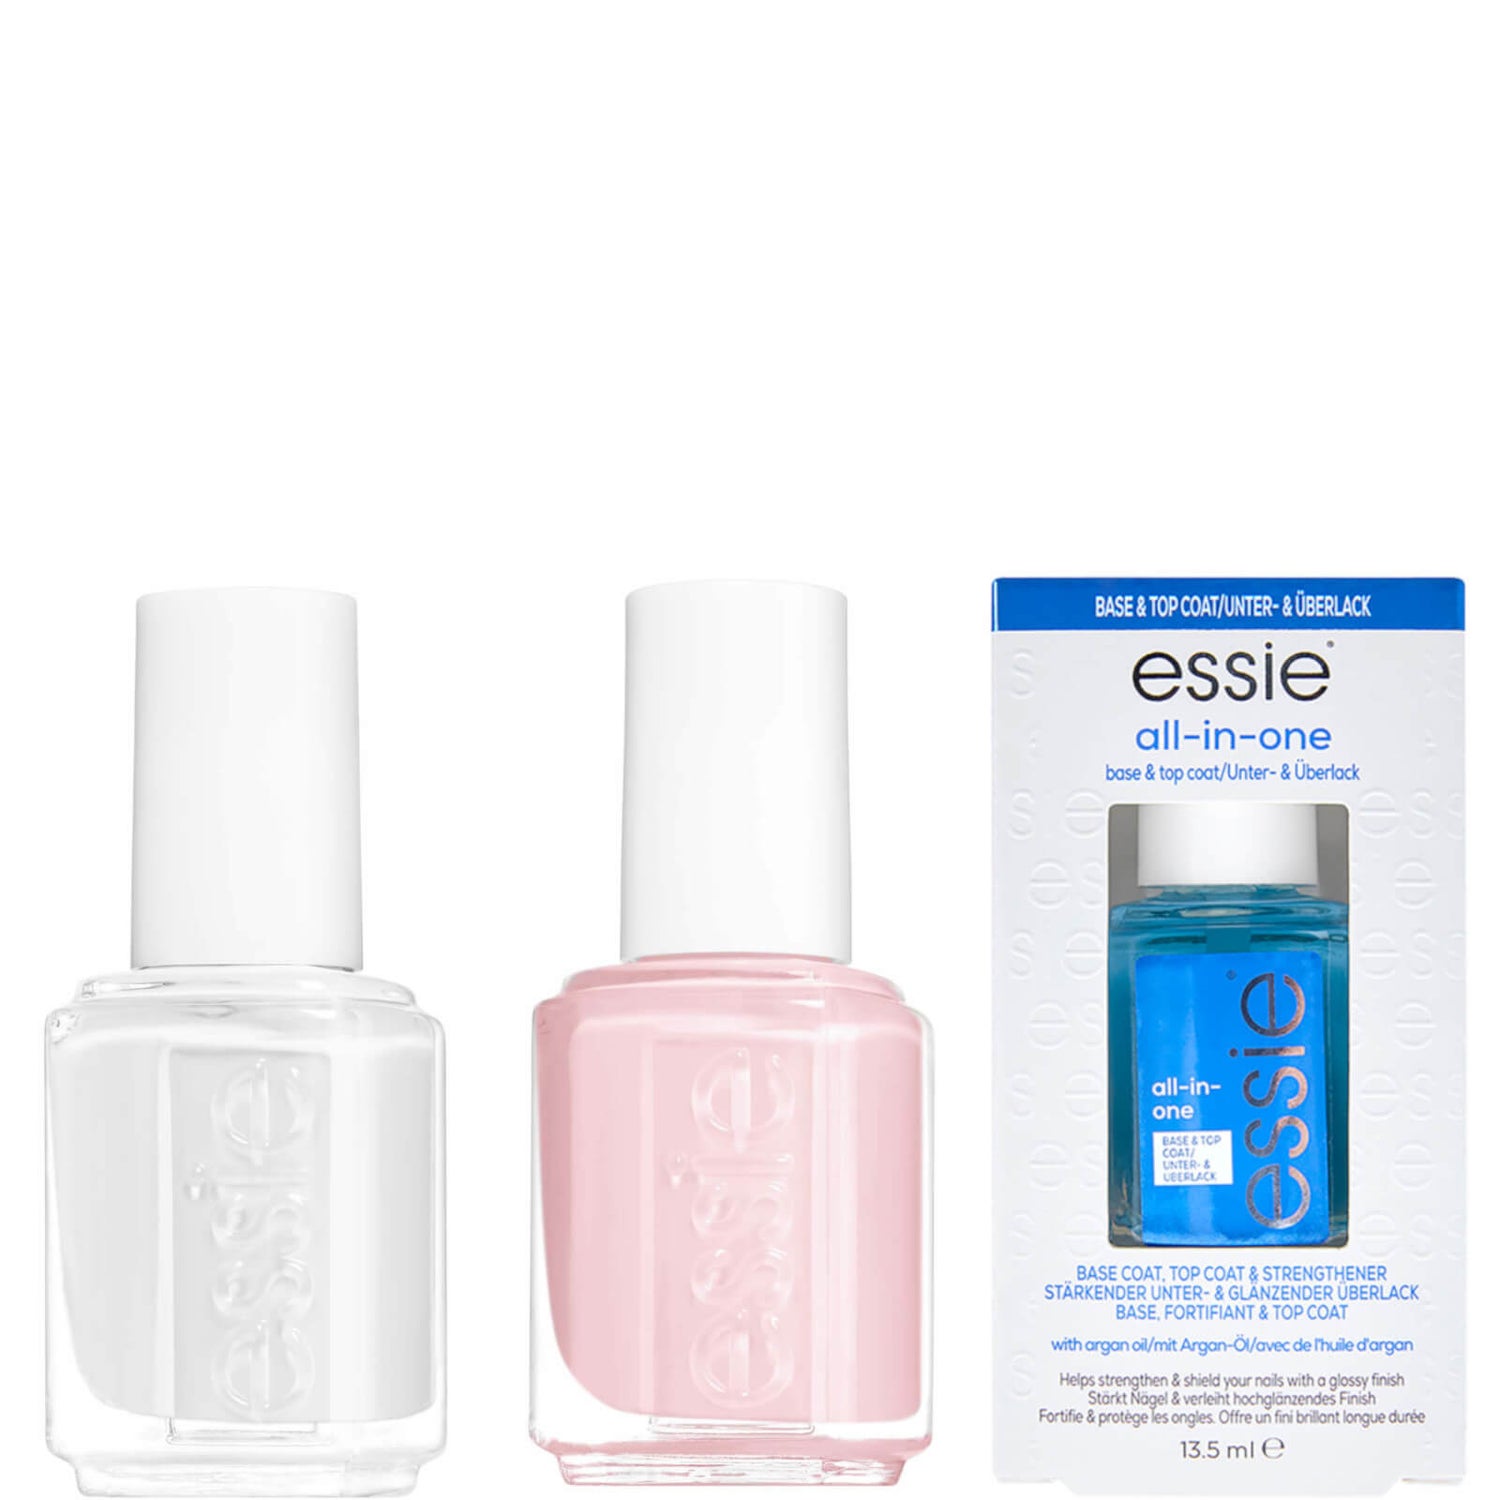 essie French Manicure Kit